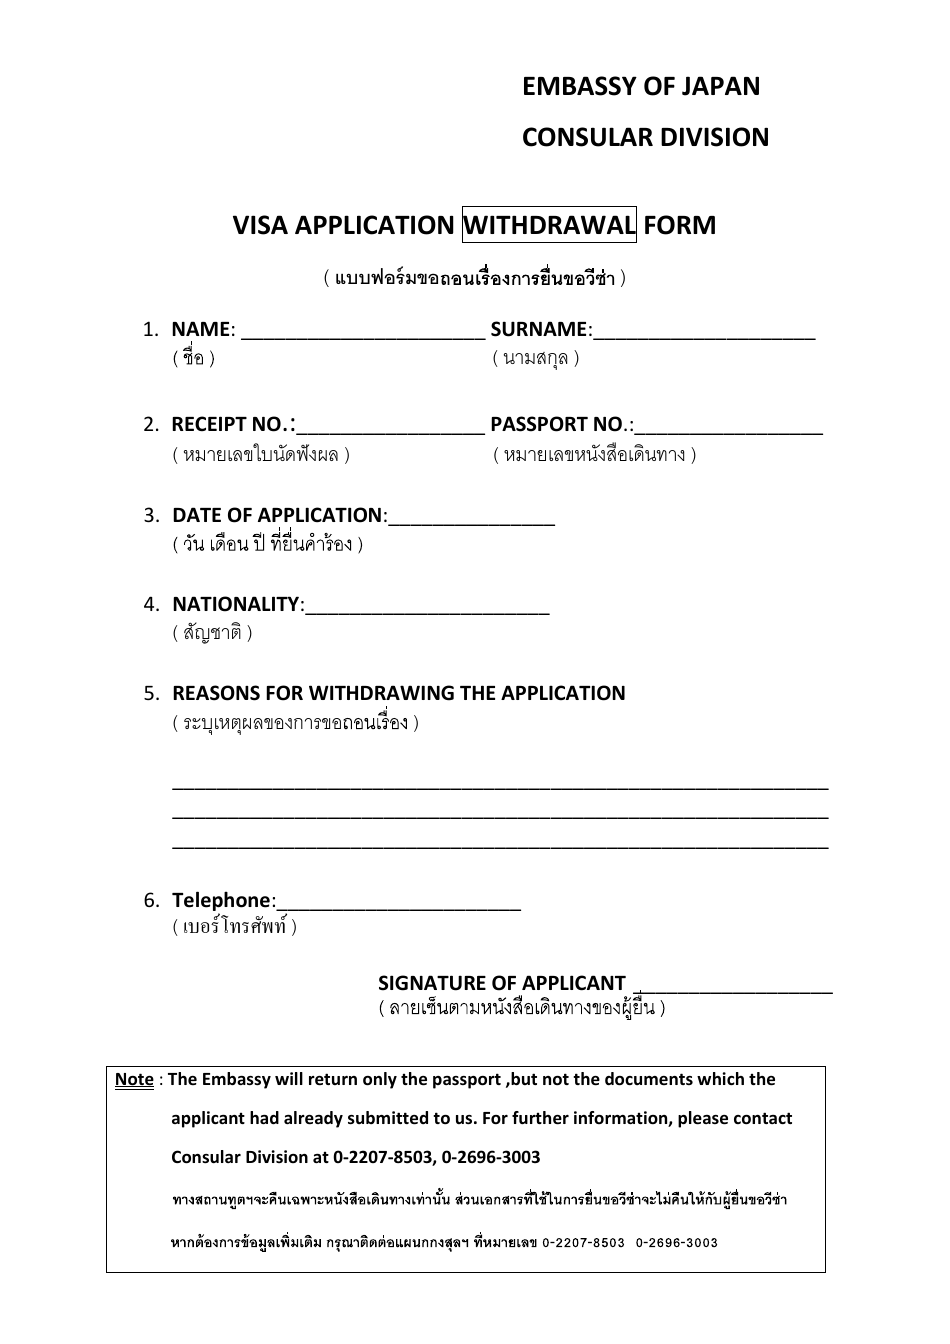 Japanese Visa Application Withdrawal Form - Embassy of Japan - Thailand, Page 1